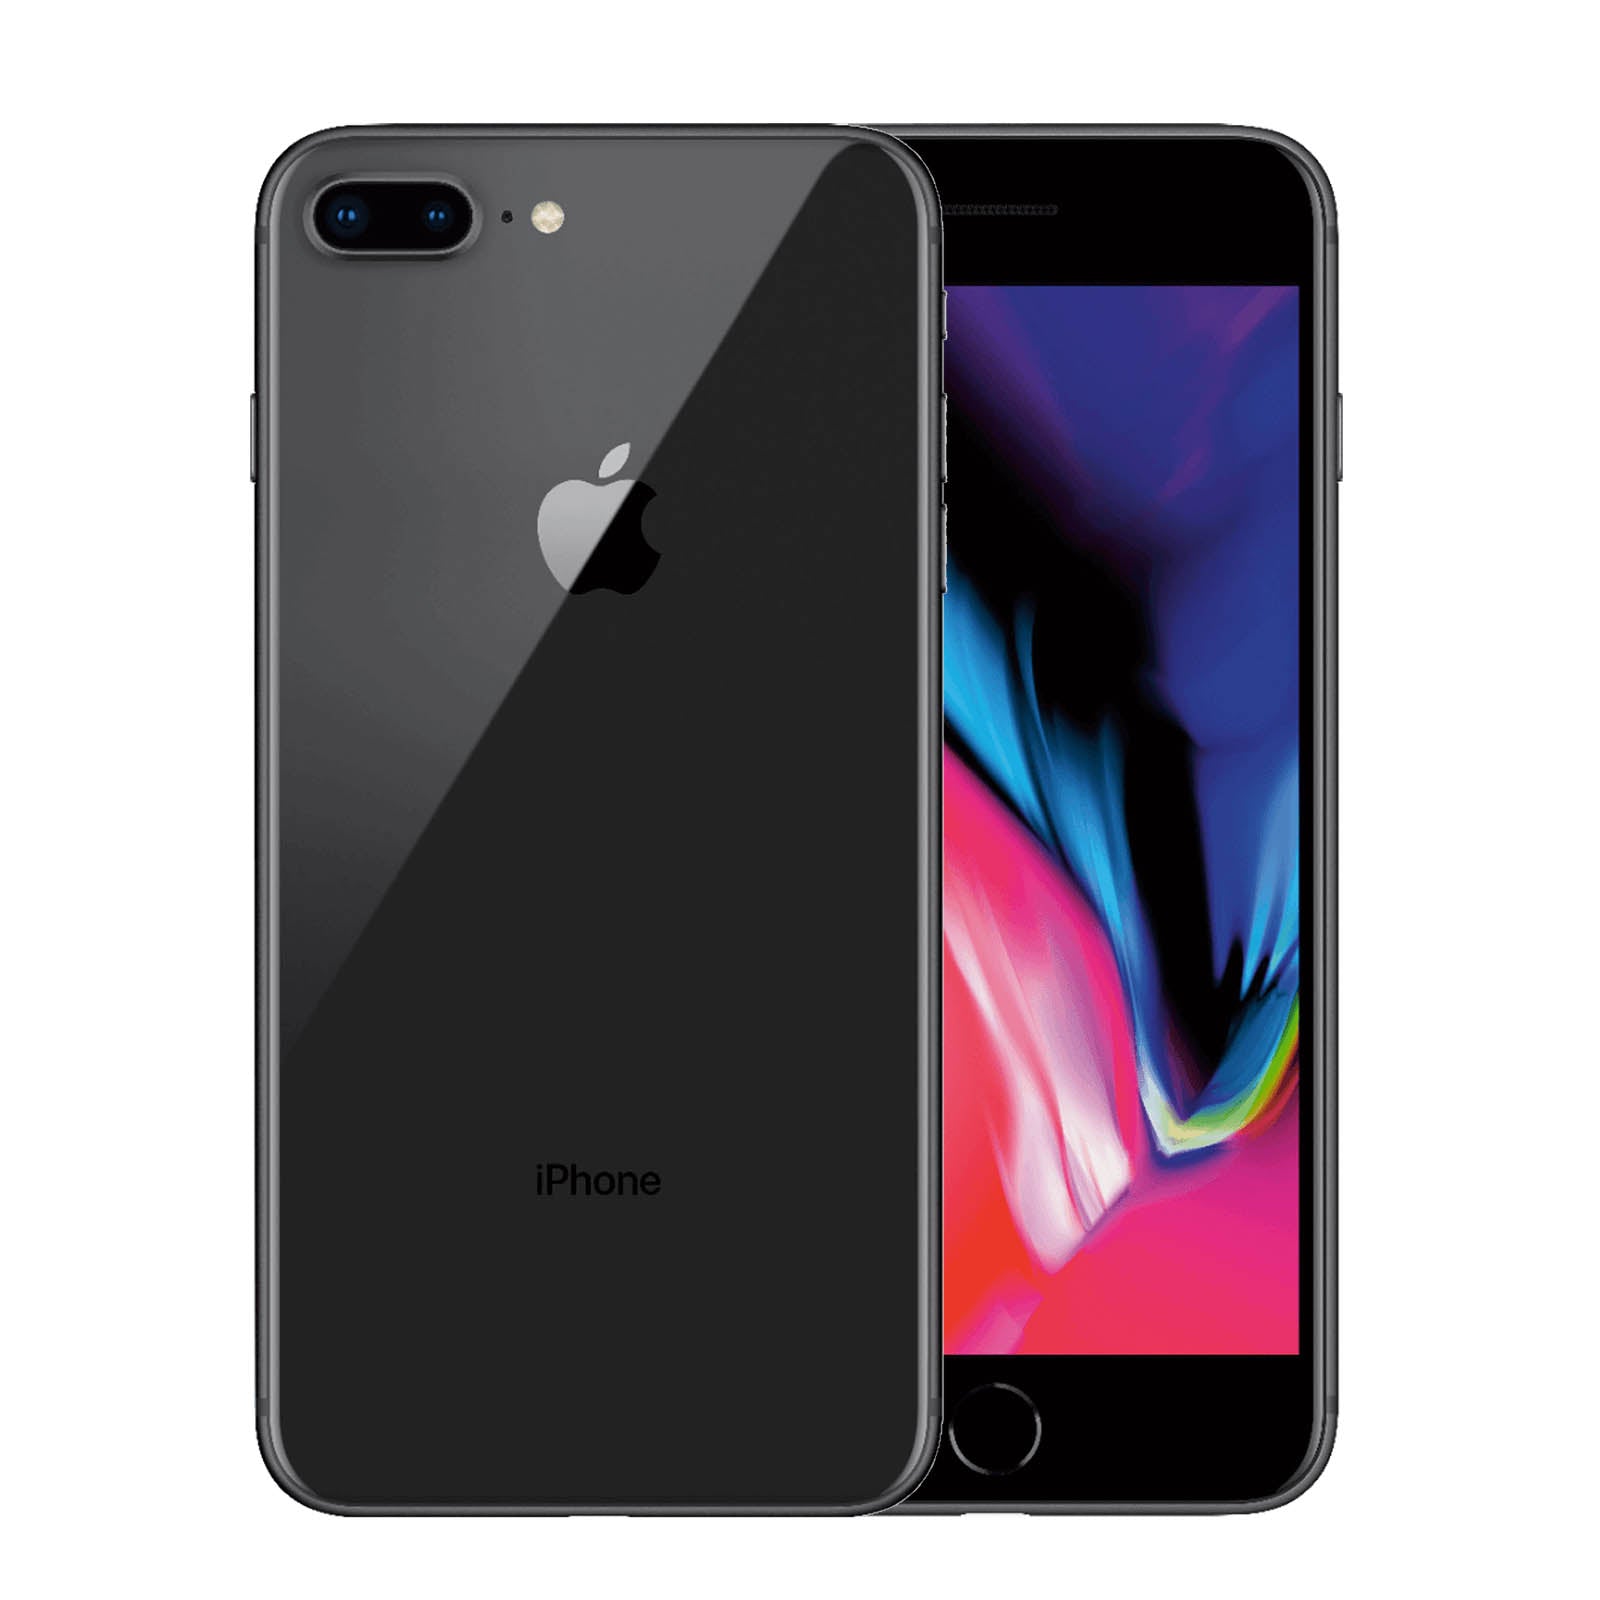 Apple iPhone 8 Plus 64GB Space Grey Fair - Unlocked